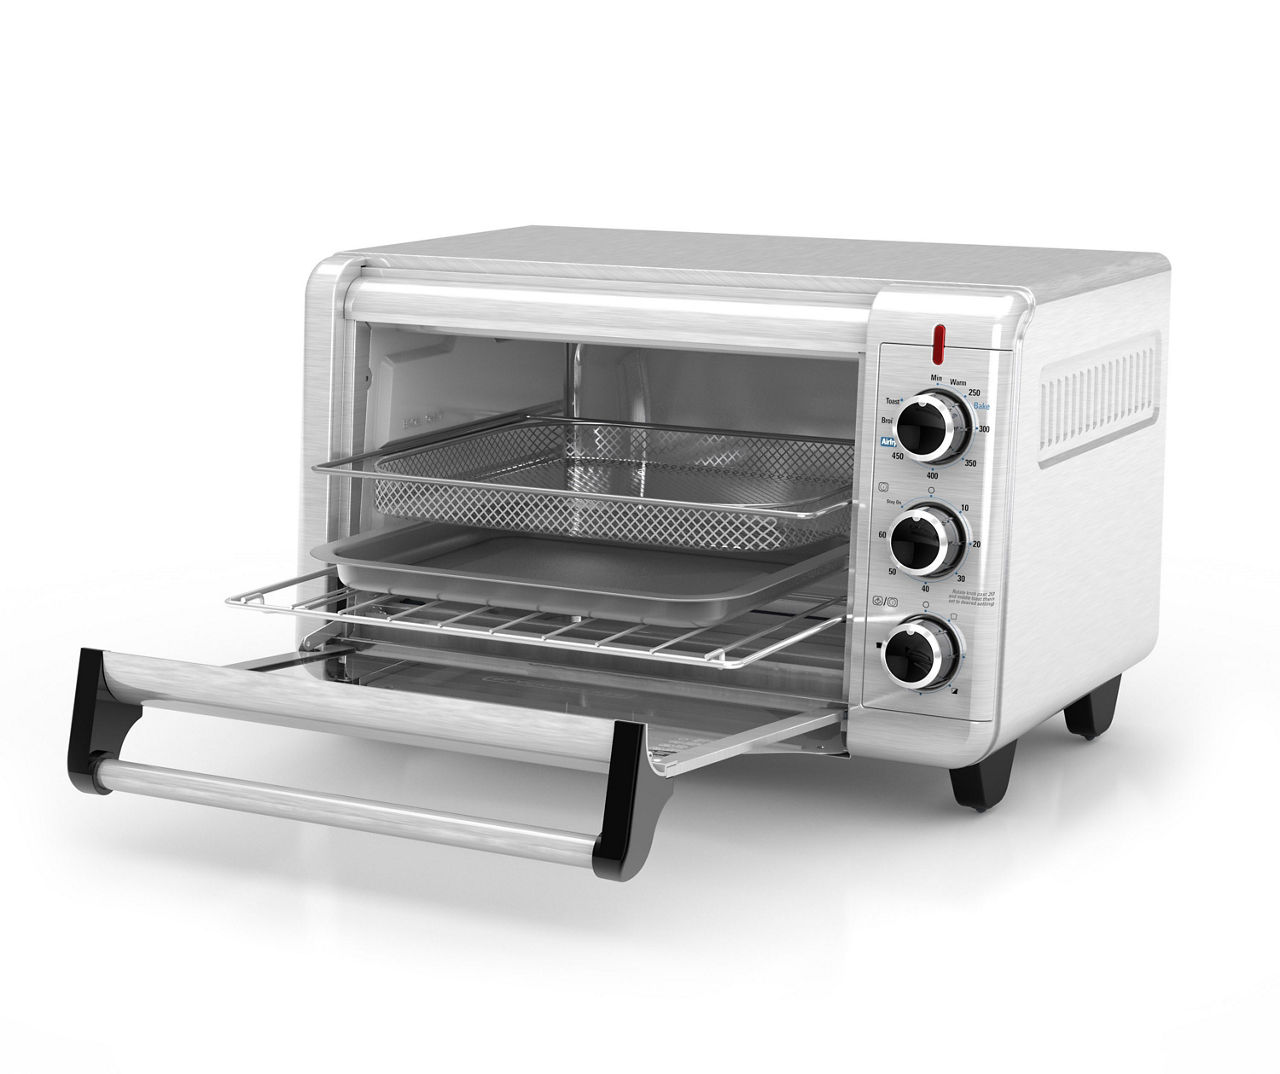 Crisp 'n Bake Air Fry Digital 4-Slice Toaster Oven